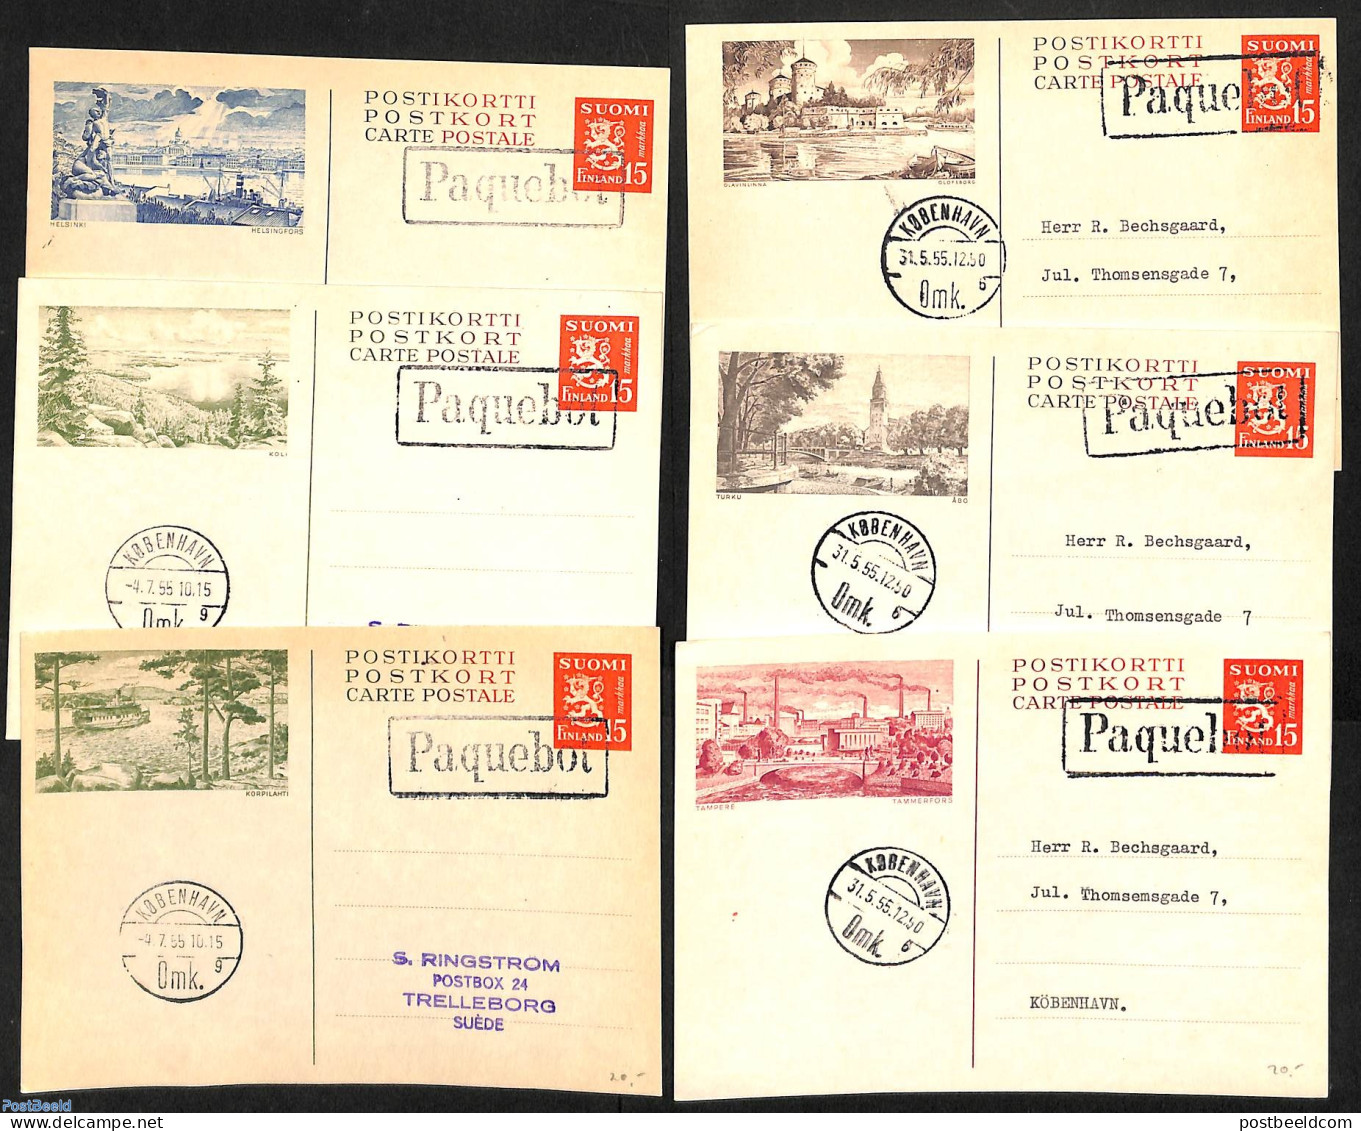 Finland 1952 6 Illustrated Postcards, Used Postal Stationary - Briefe U. Dokumente